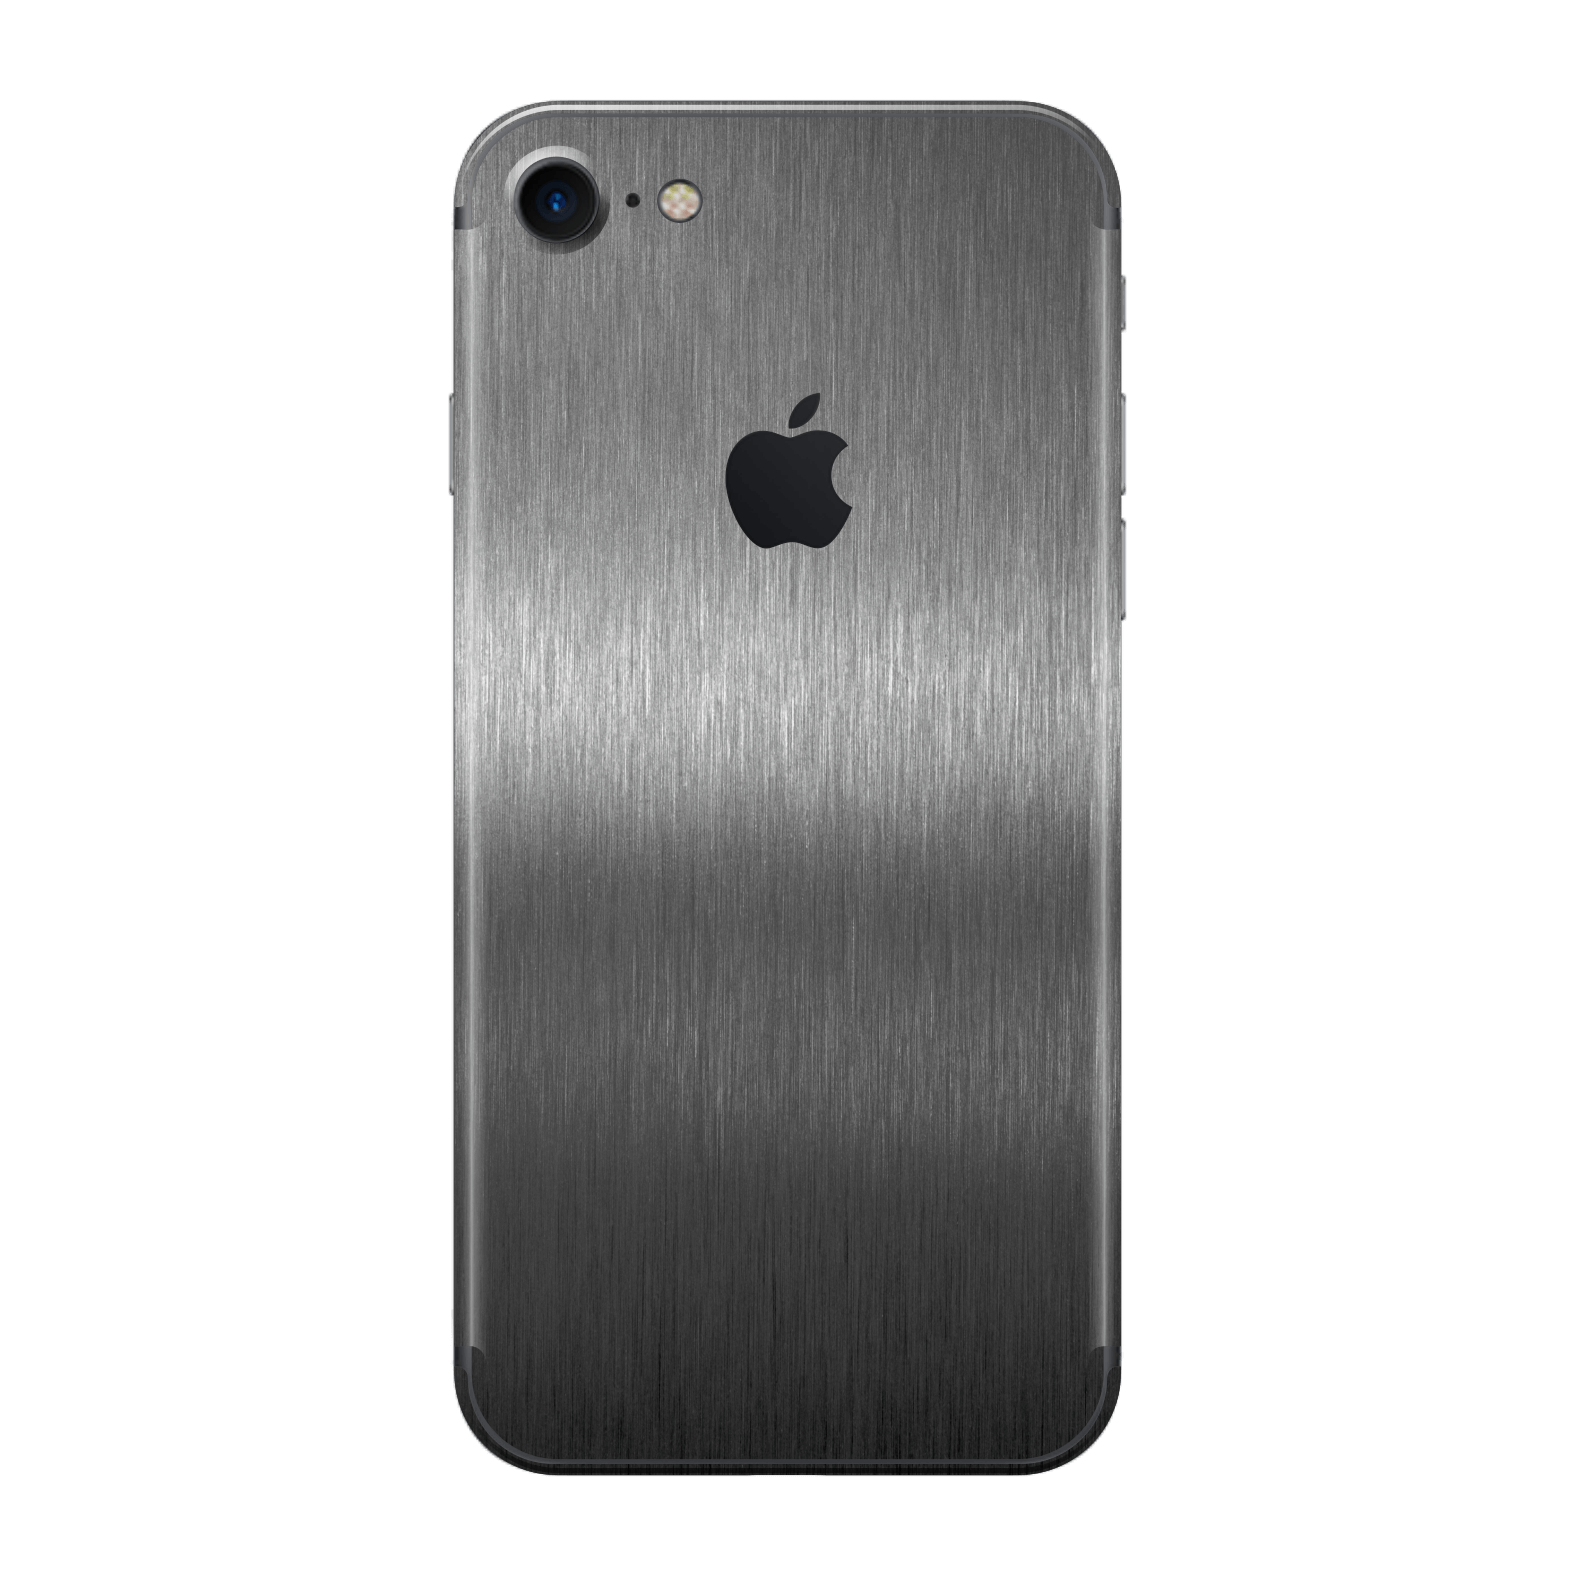 iPhone SE (20/22) Brushed Metal Titanium Metallic Skin Wrap Sticker Decal Cover Protector by EasySkinz | EasySkinz.com